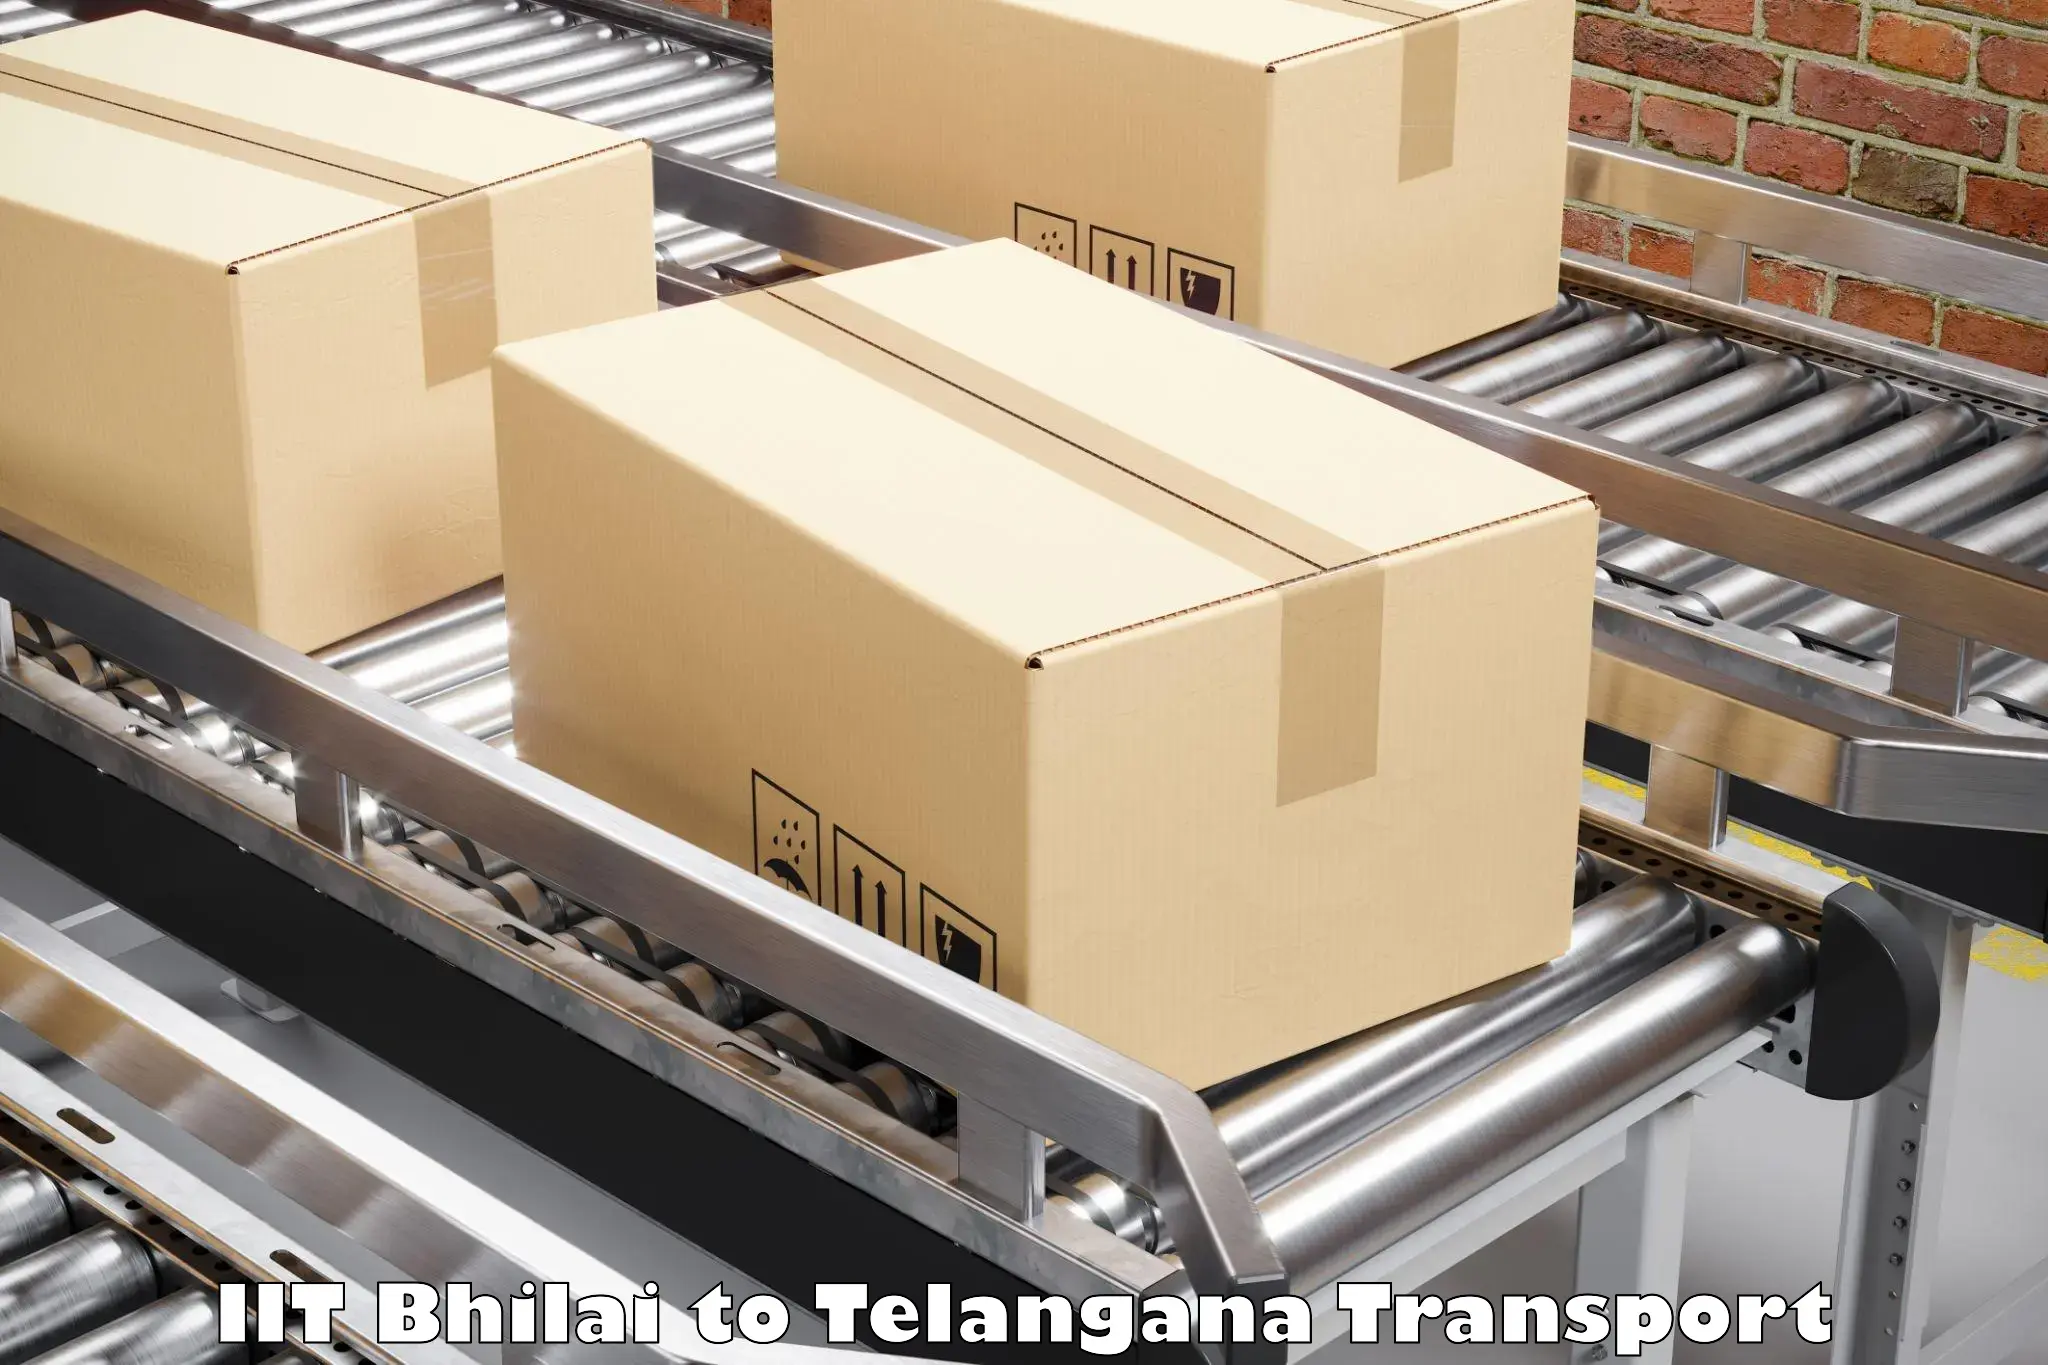 Online transport service IIT Bhilai to Vikarabad